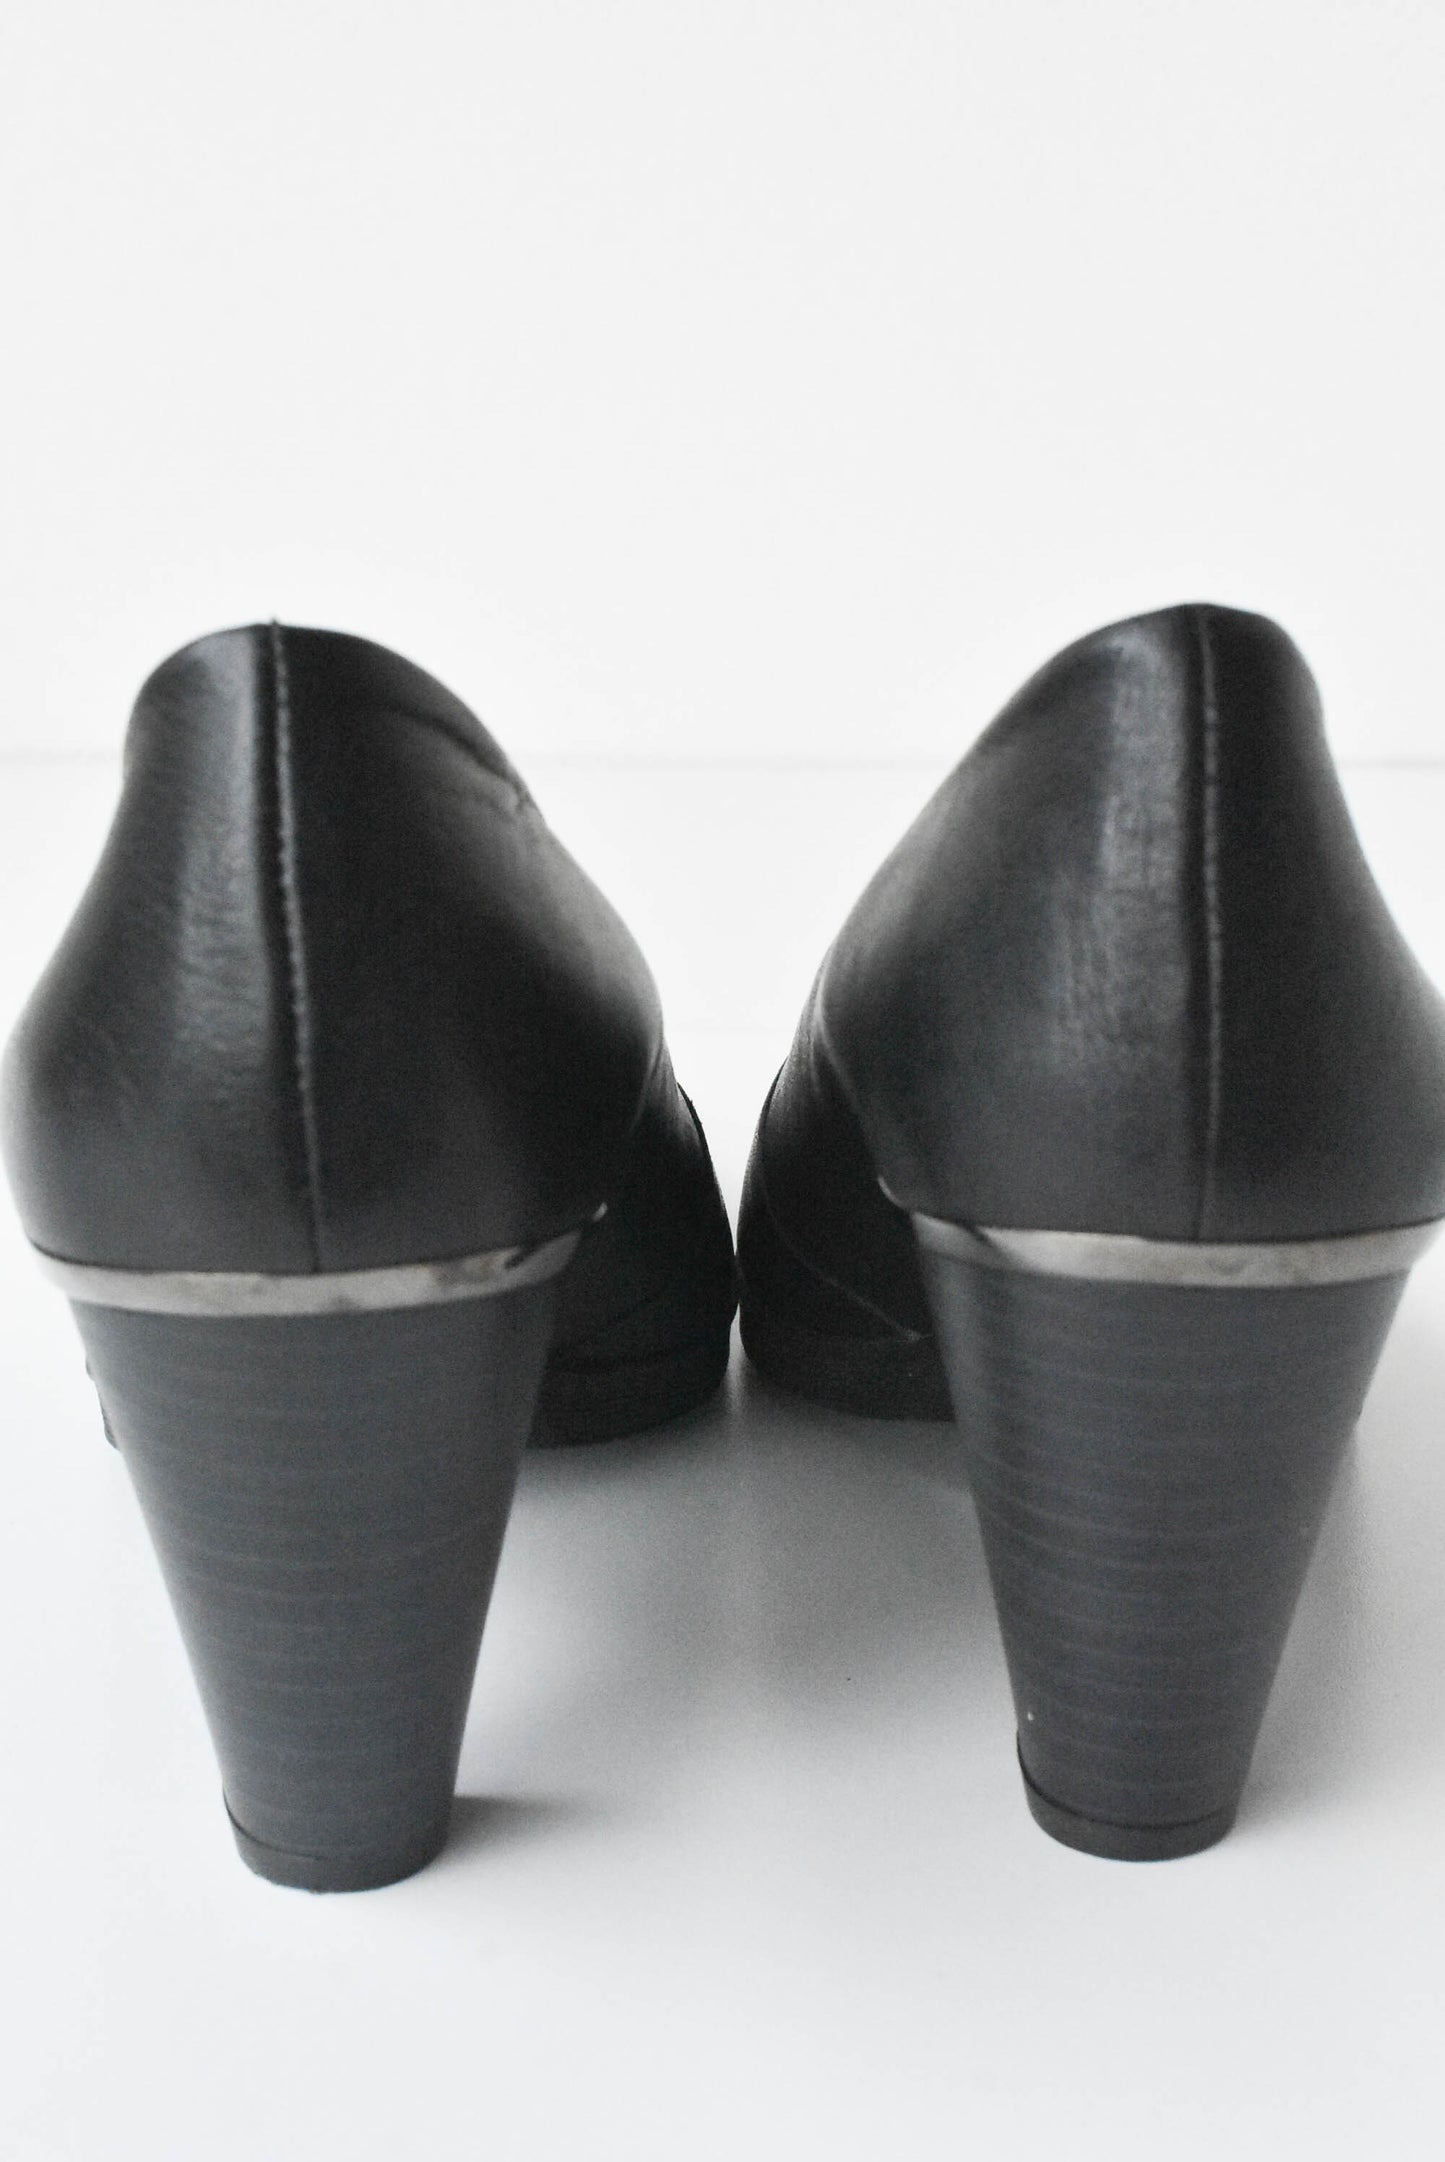 Hispanita black leather heels, size 37